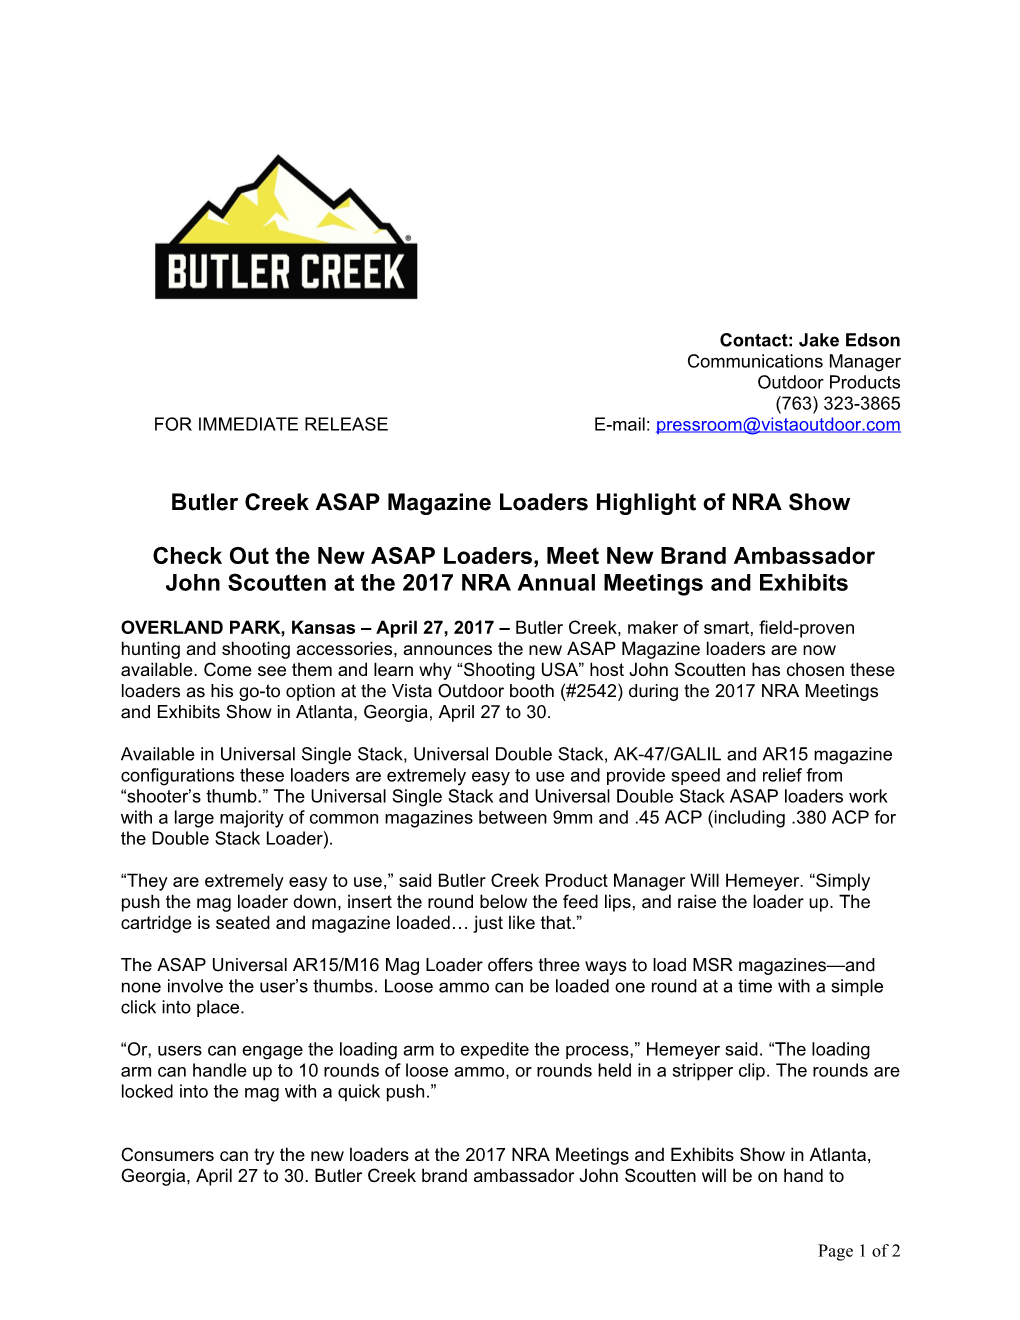 Butler Creek ASAP Magazine Loaders Highlight of NRA Show